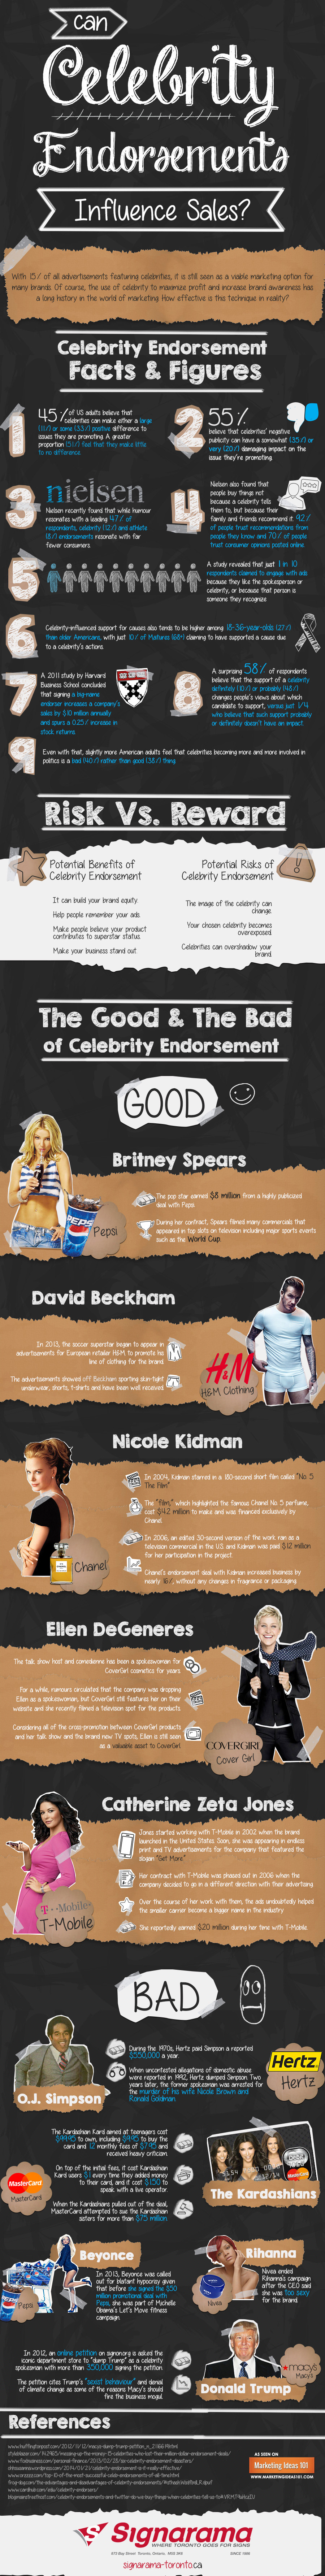 infographic celebrity endorsements